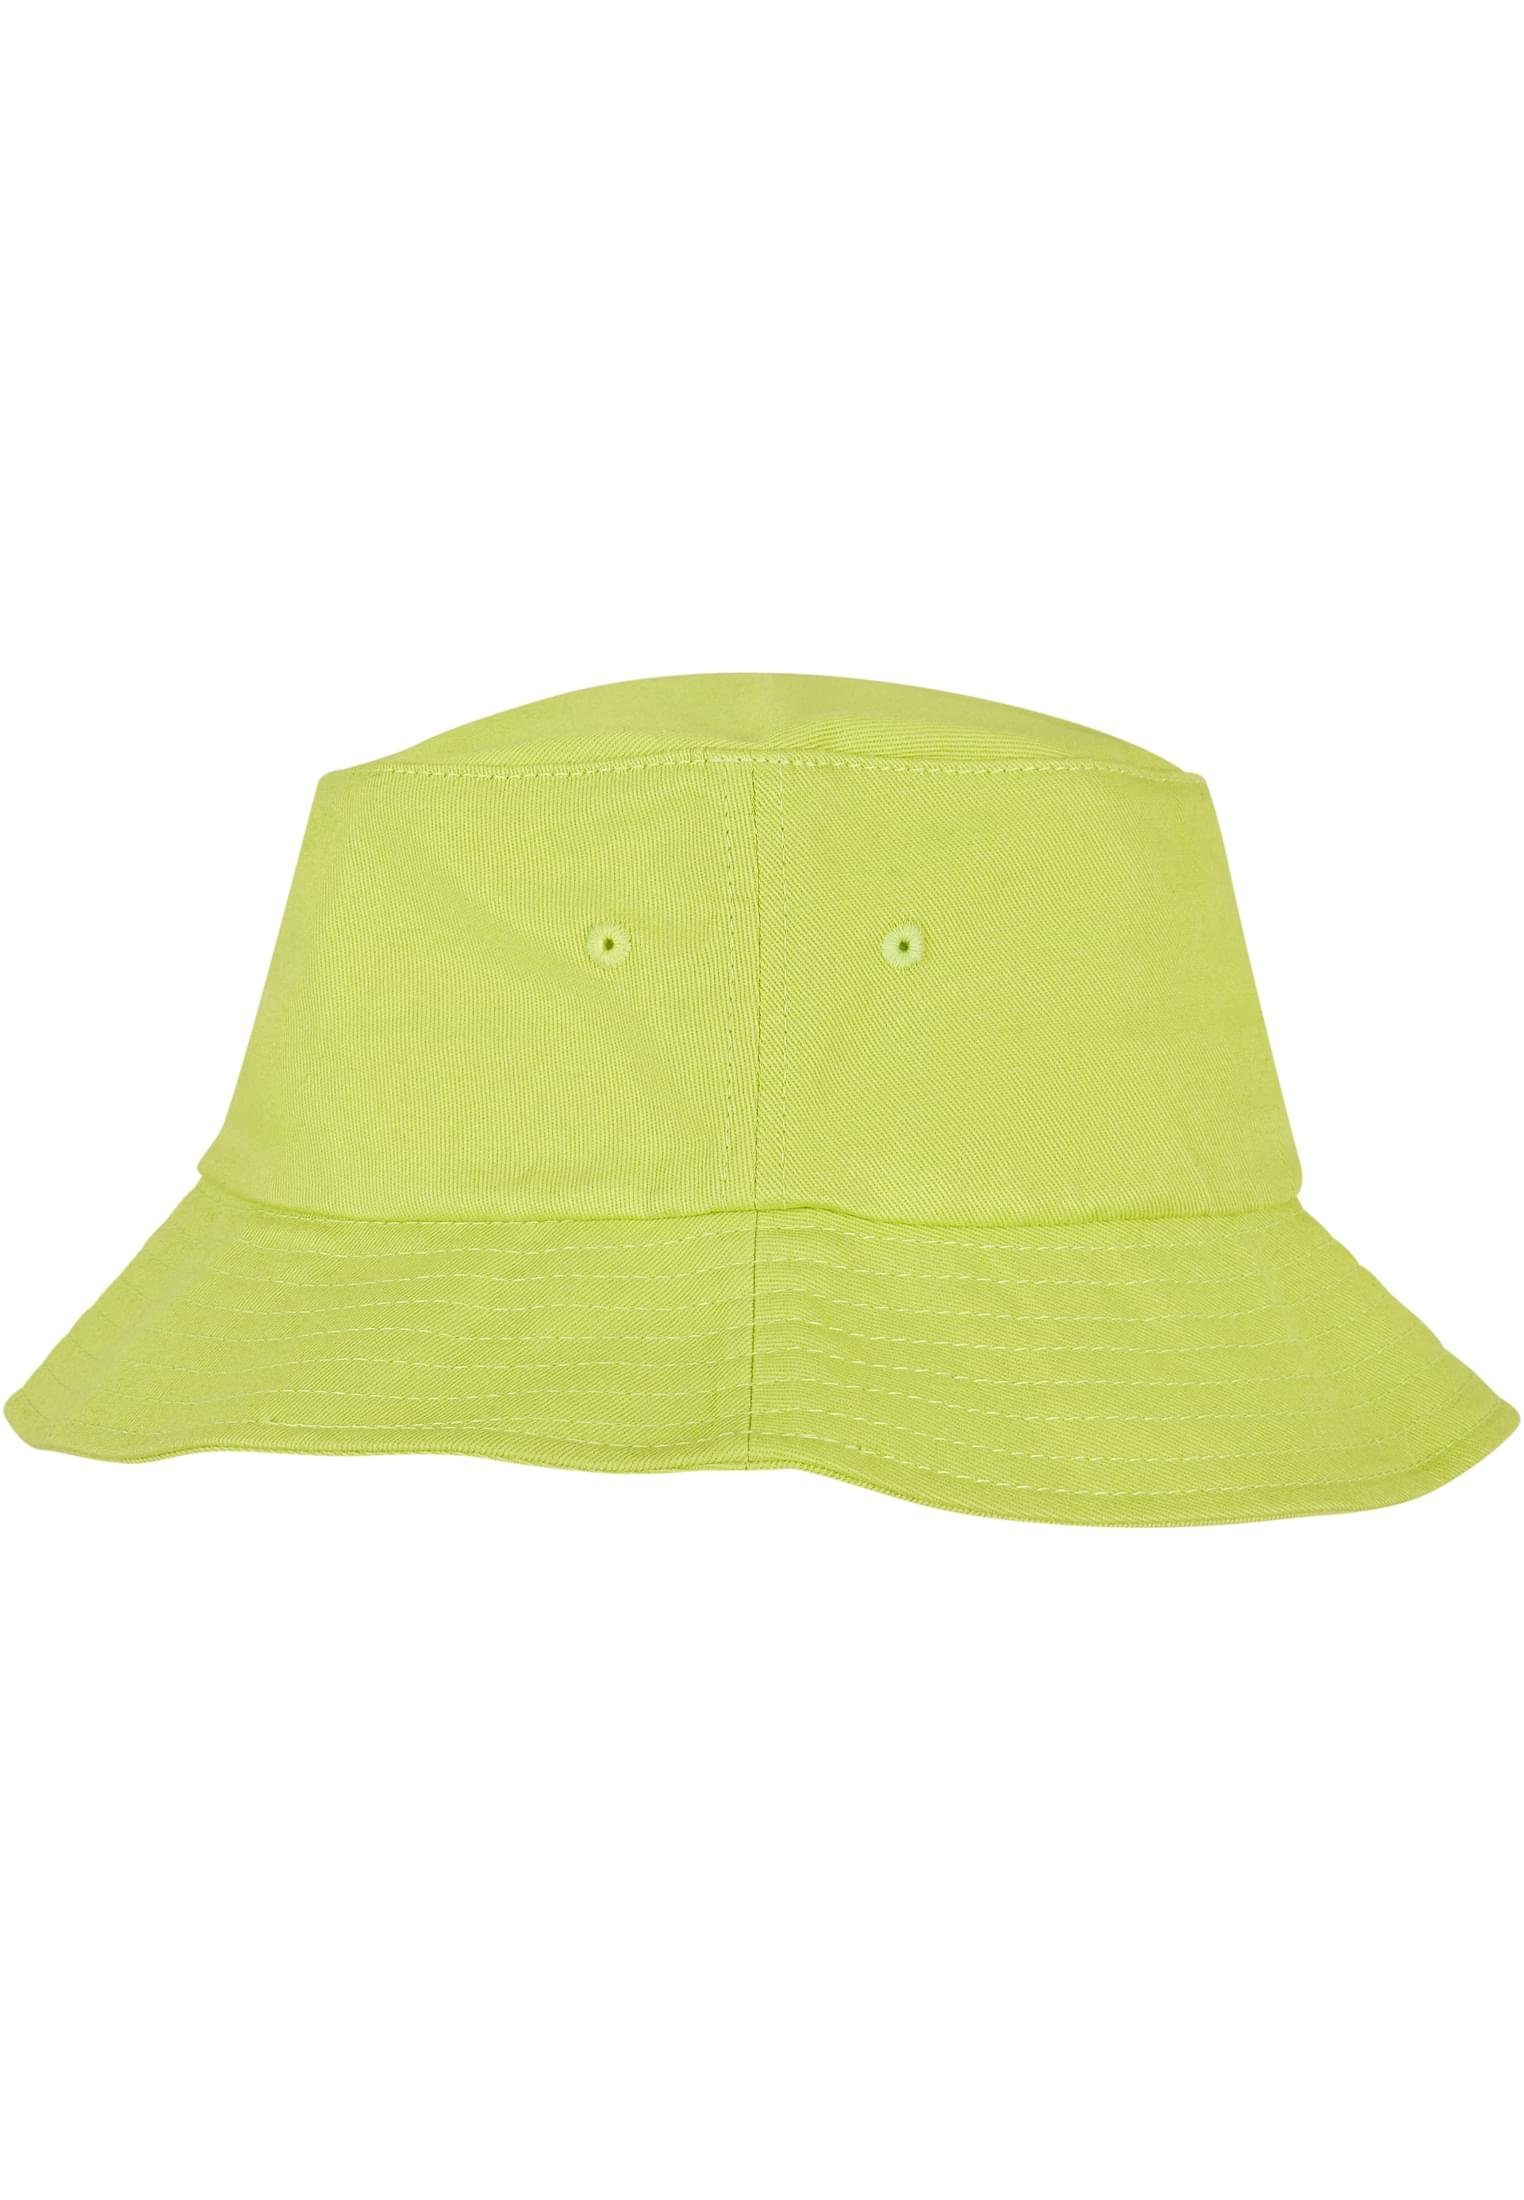 Accessoires Cotton Hat greenglow Flexfit Bucket Flexfit Cap Twill Flex